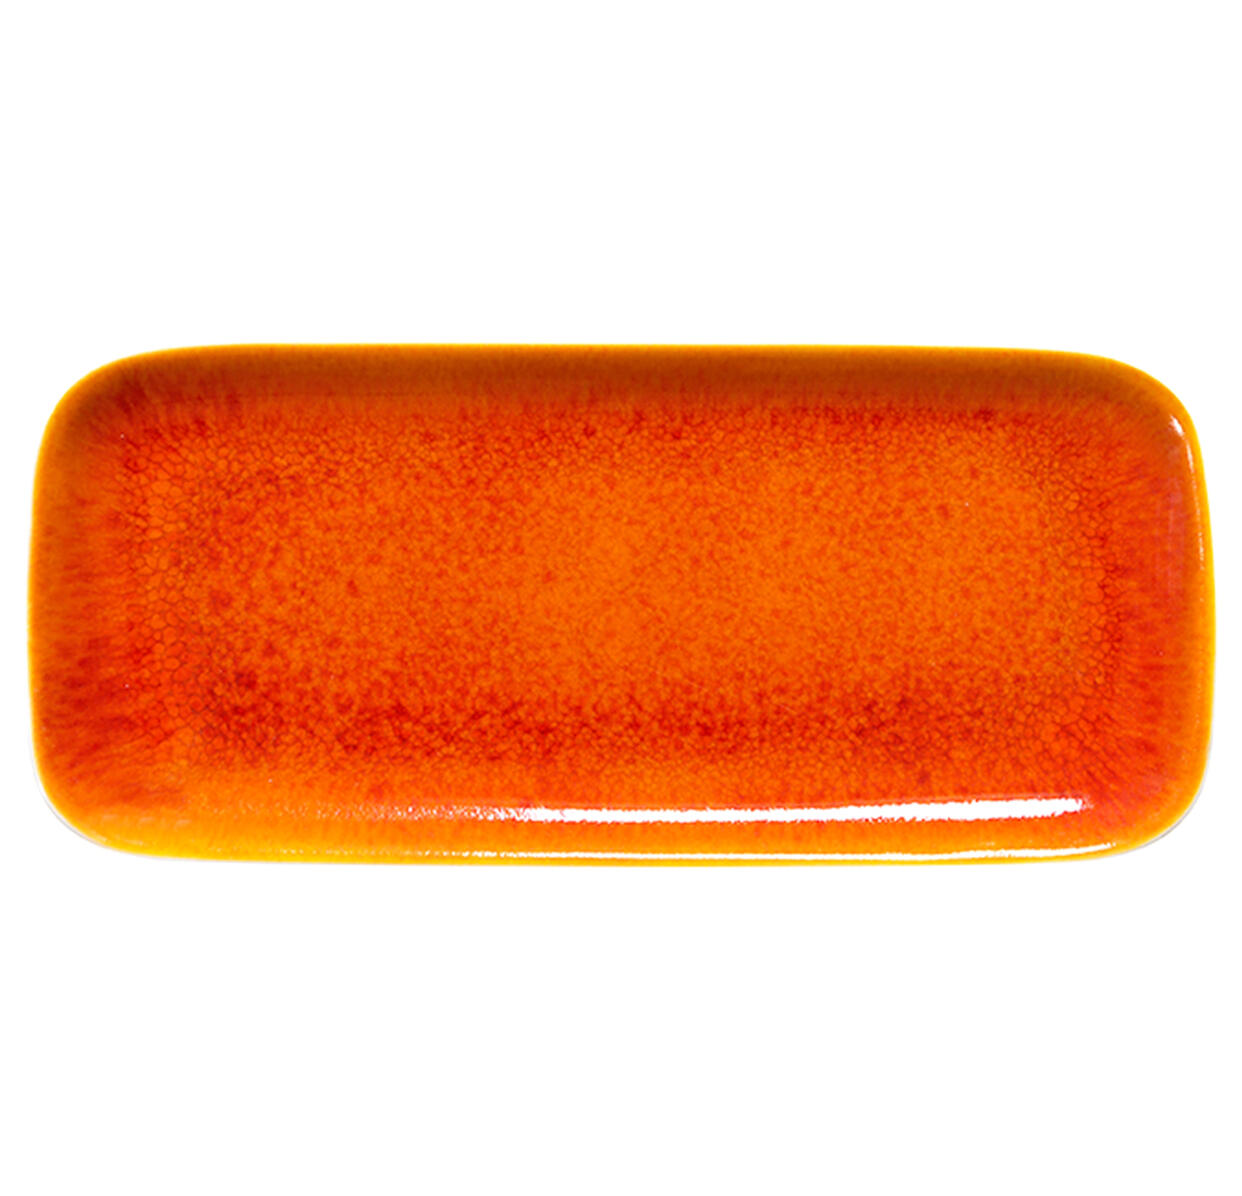 cake dish tourron orange ceramic manufacturer